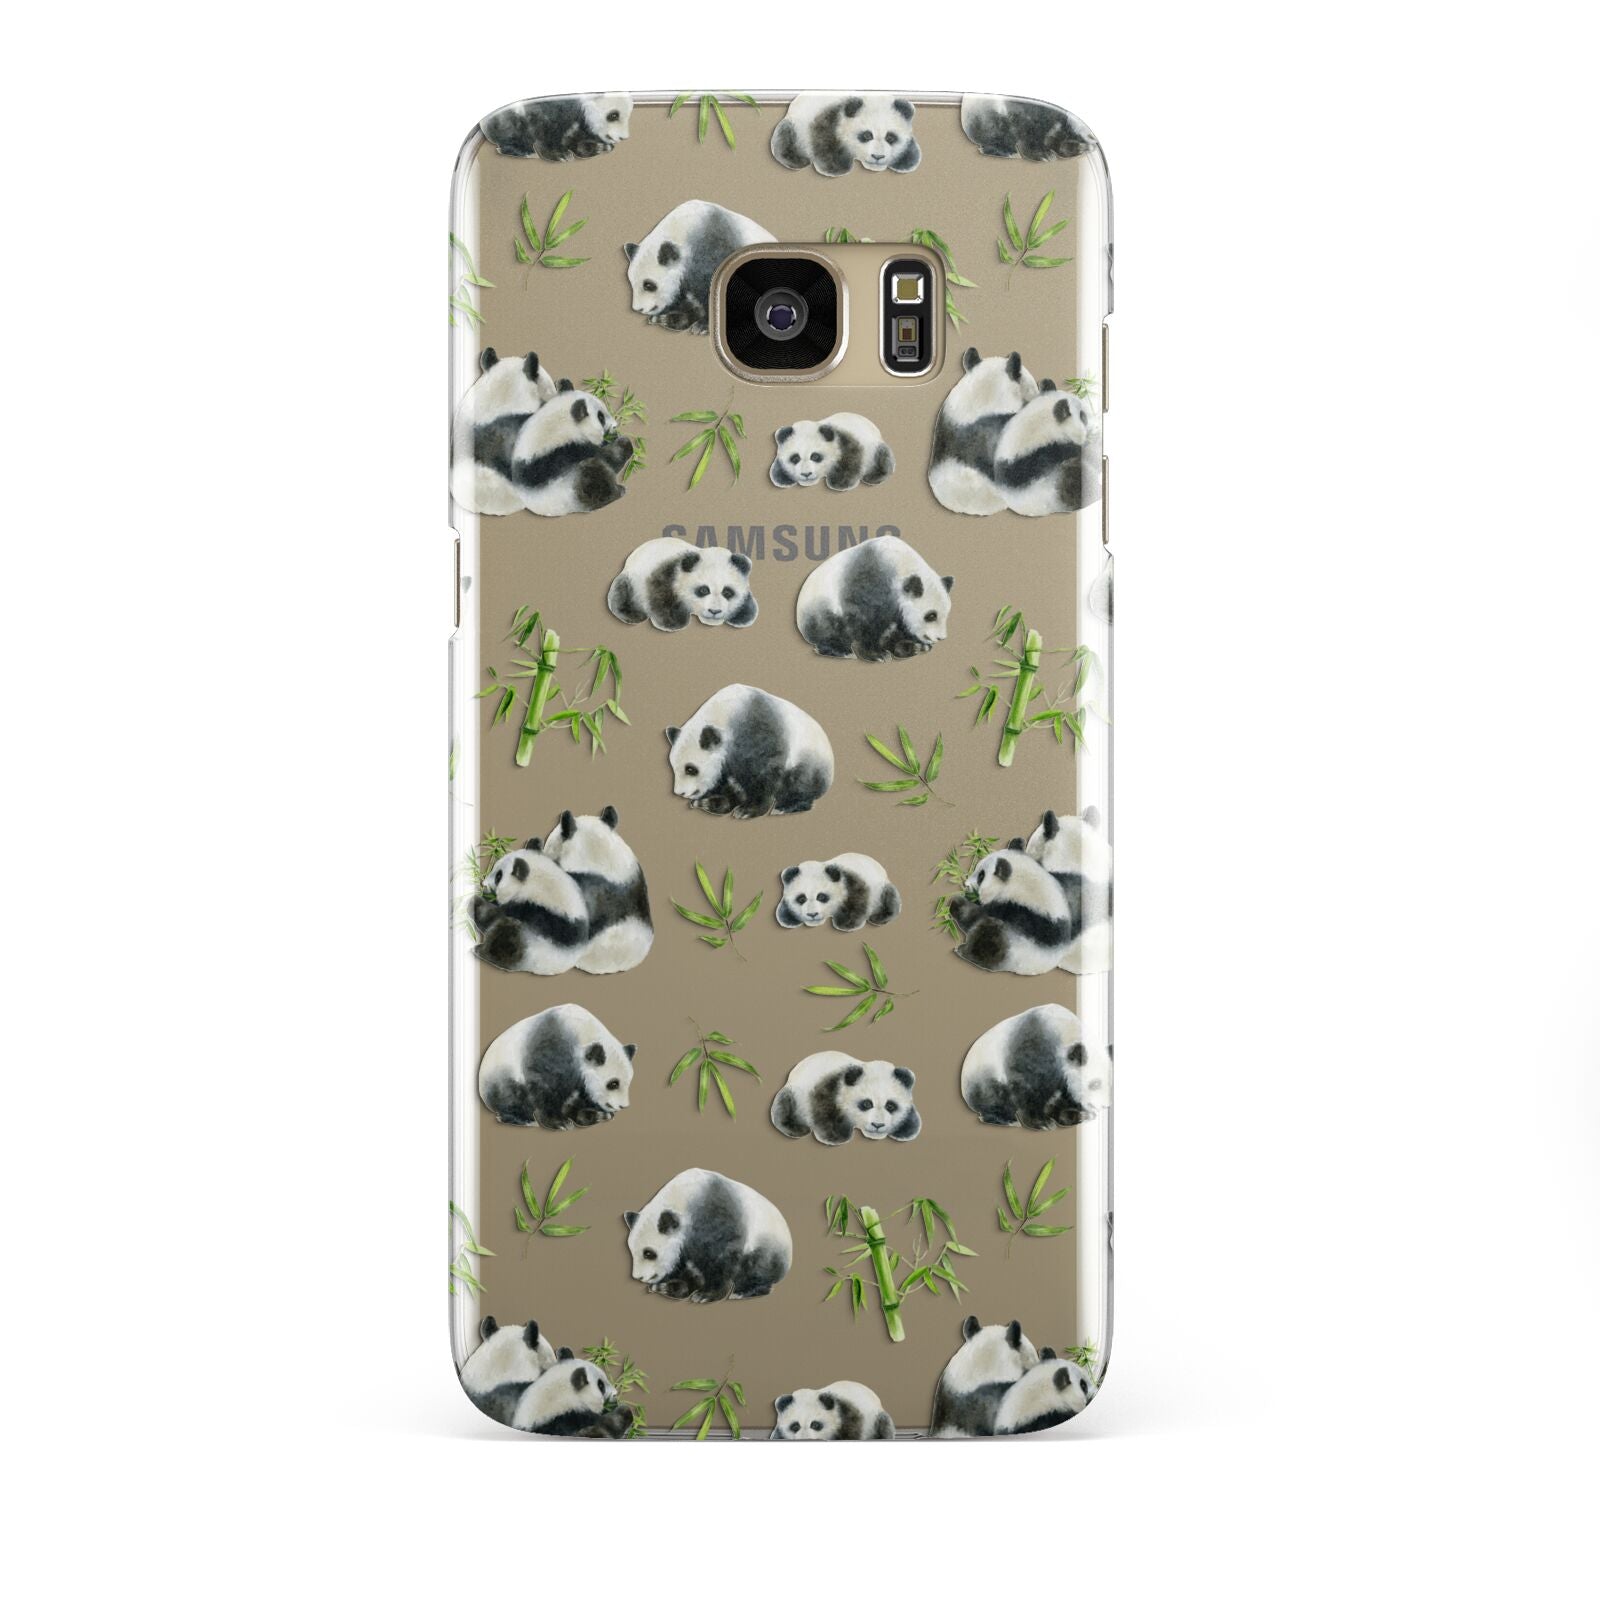 Panda Samsung Galaxy S7 Edge Case